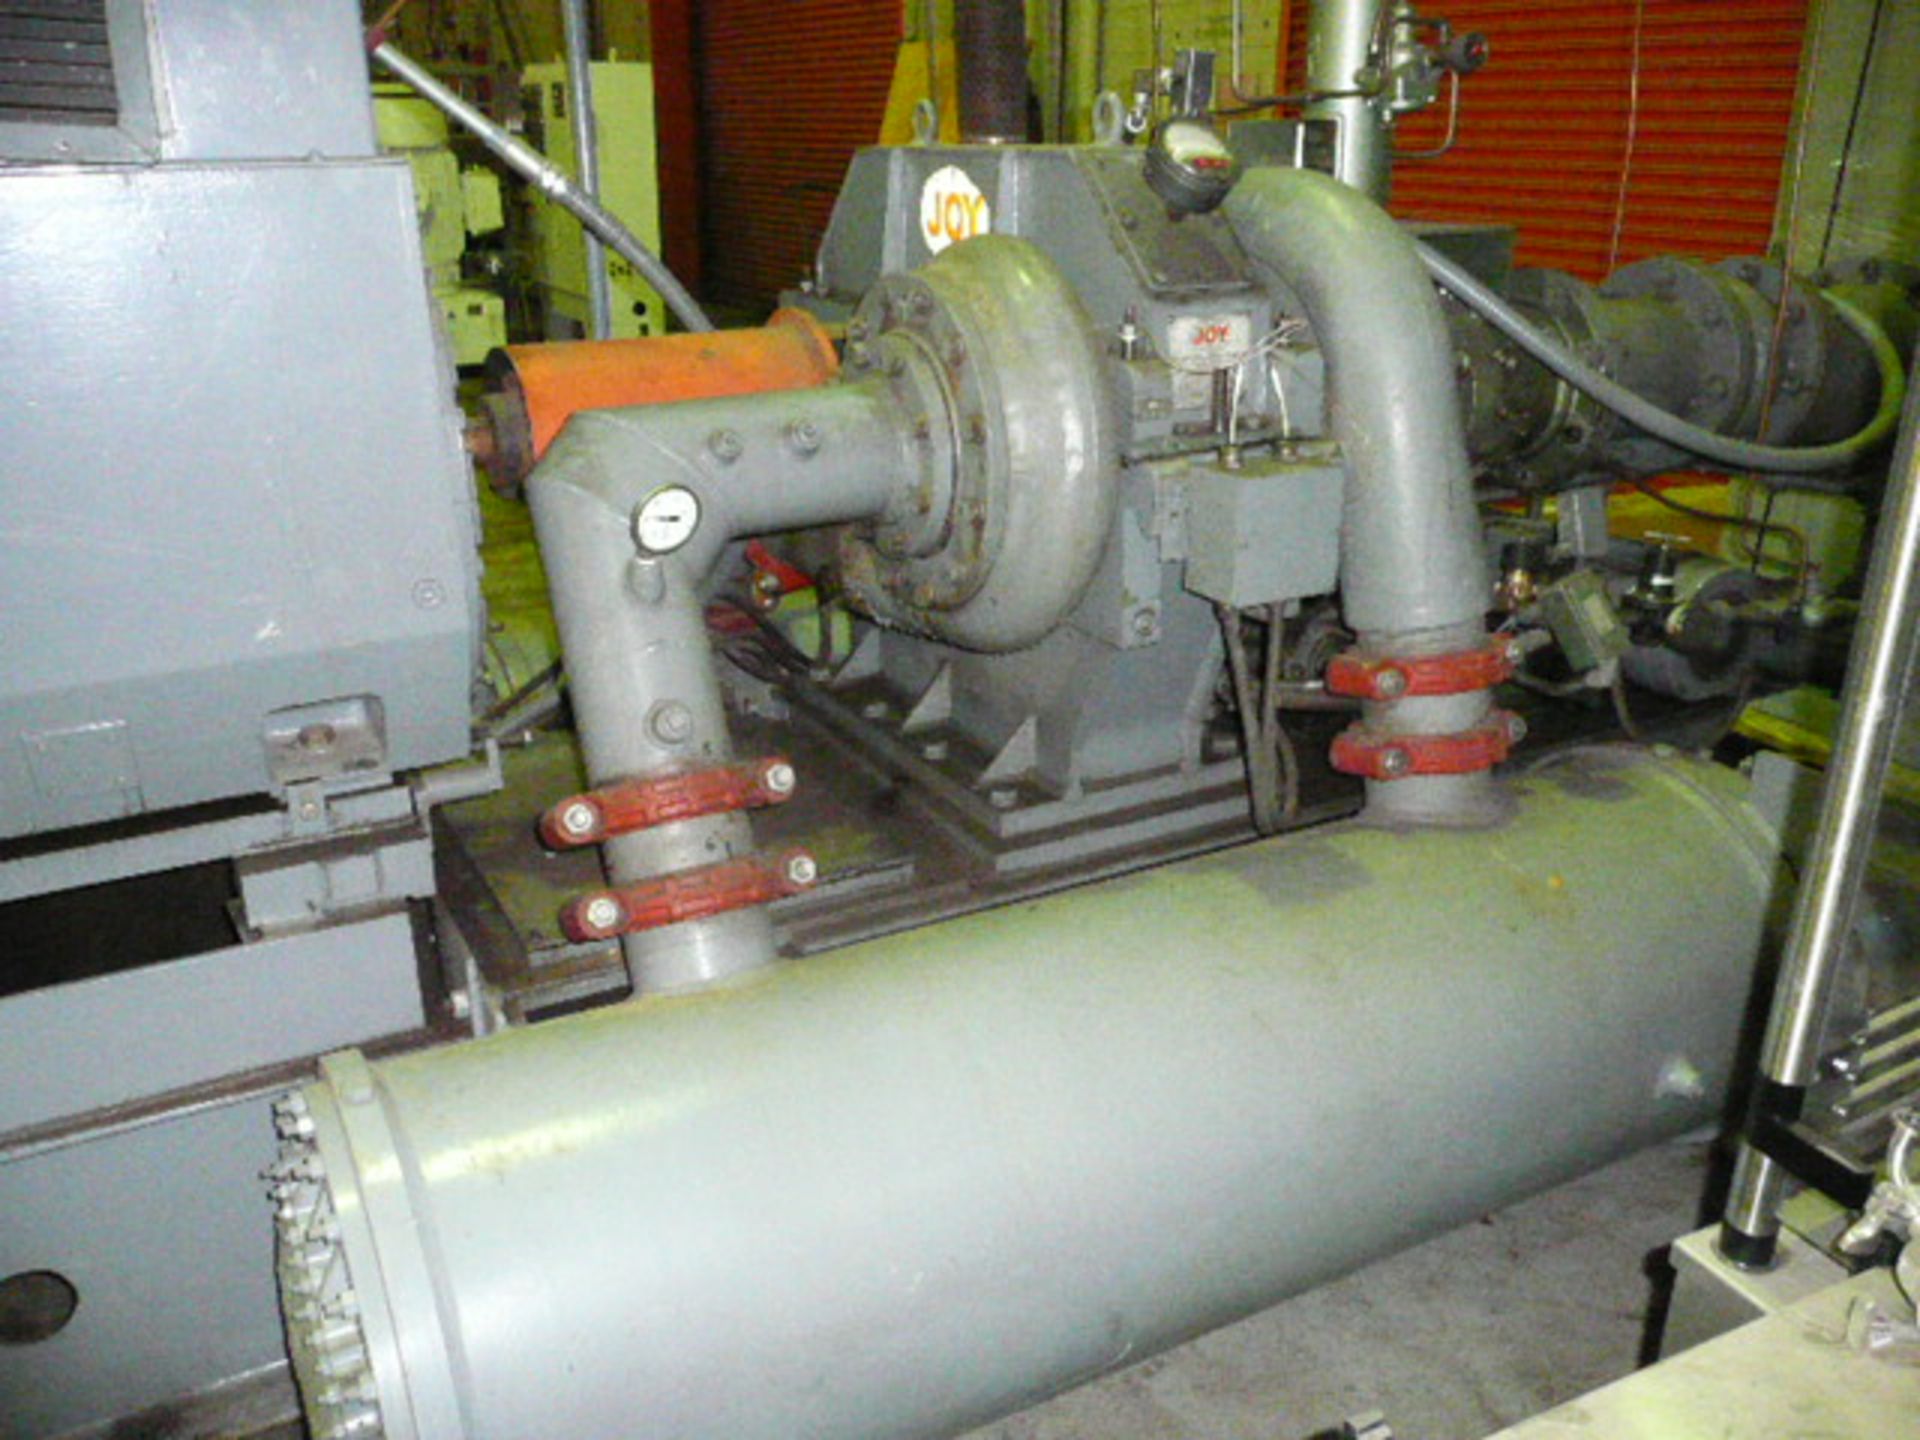 Joy Manufacturing Company Turbo Air Compressor, Model TA30. Capacity 3000 CFM. - Image 8 of 10